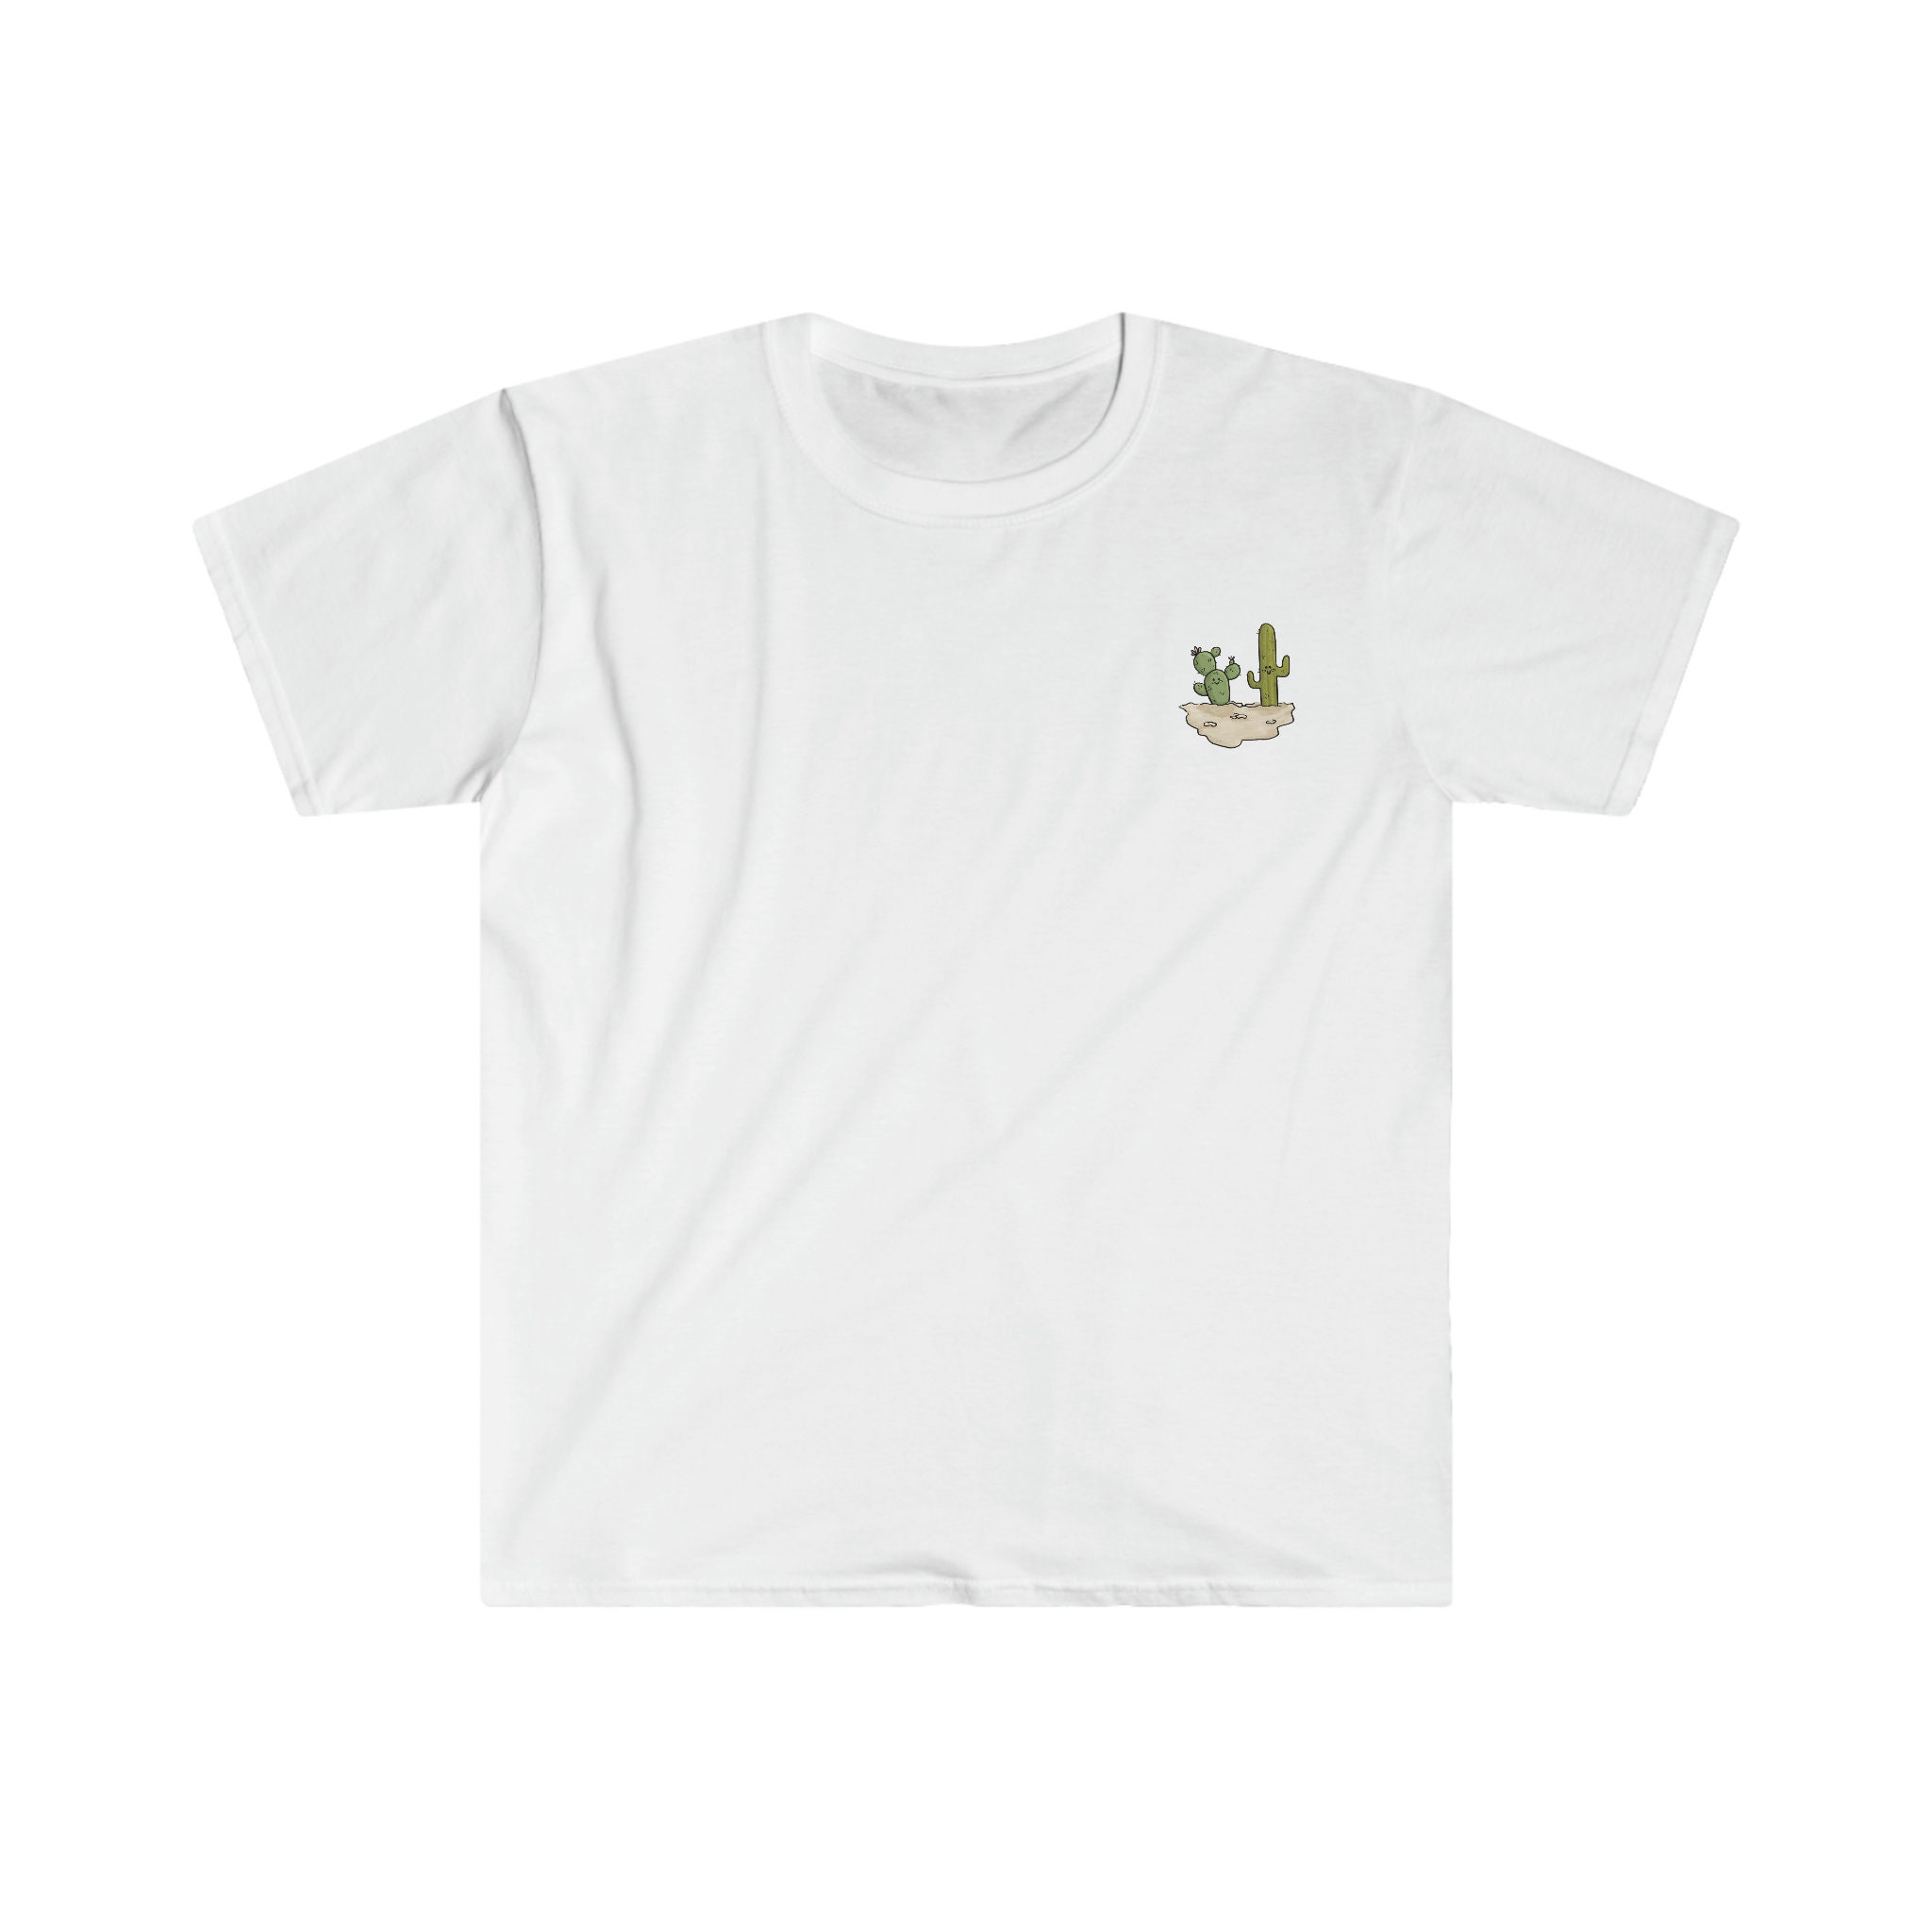 Looking Sharp Cactus Unisex Softstyle T-shirt 